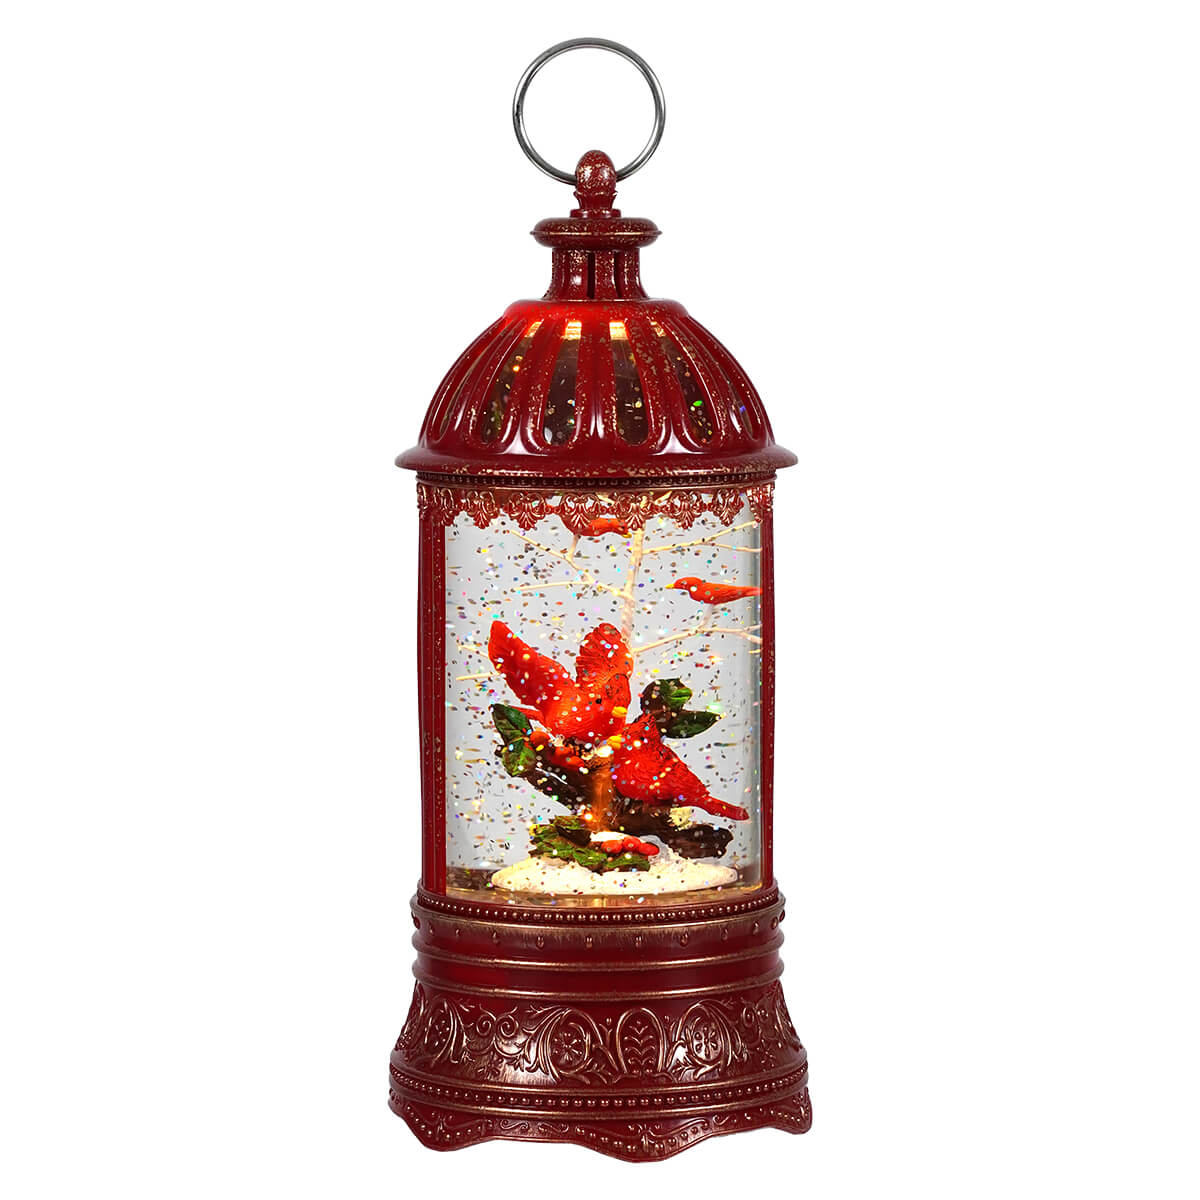 Lighted Musical Spinning Cardinal Family Water Globe Lantern